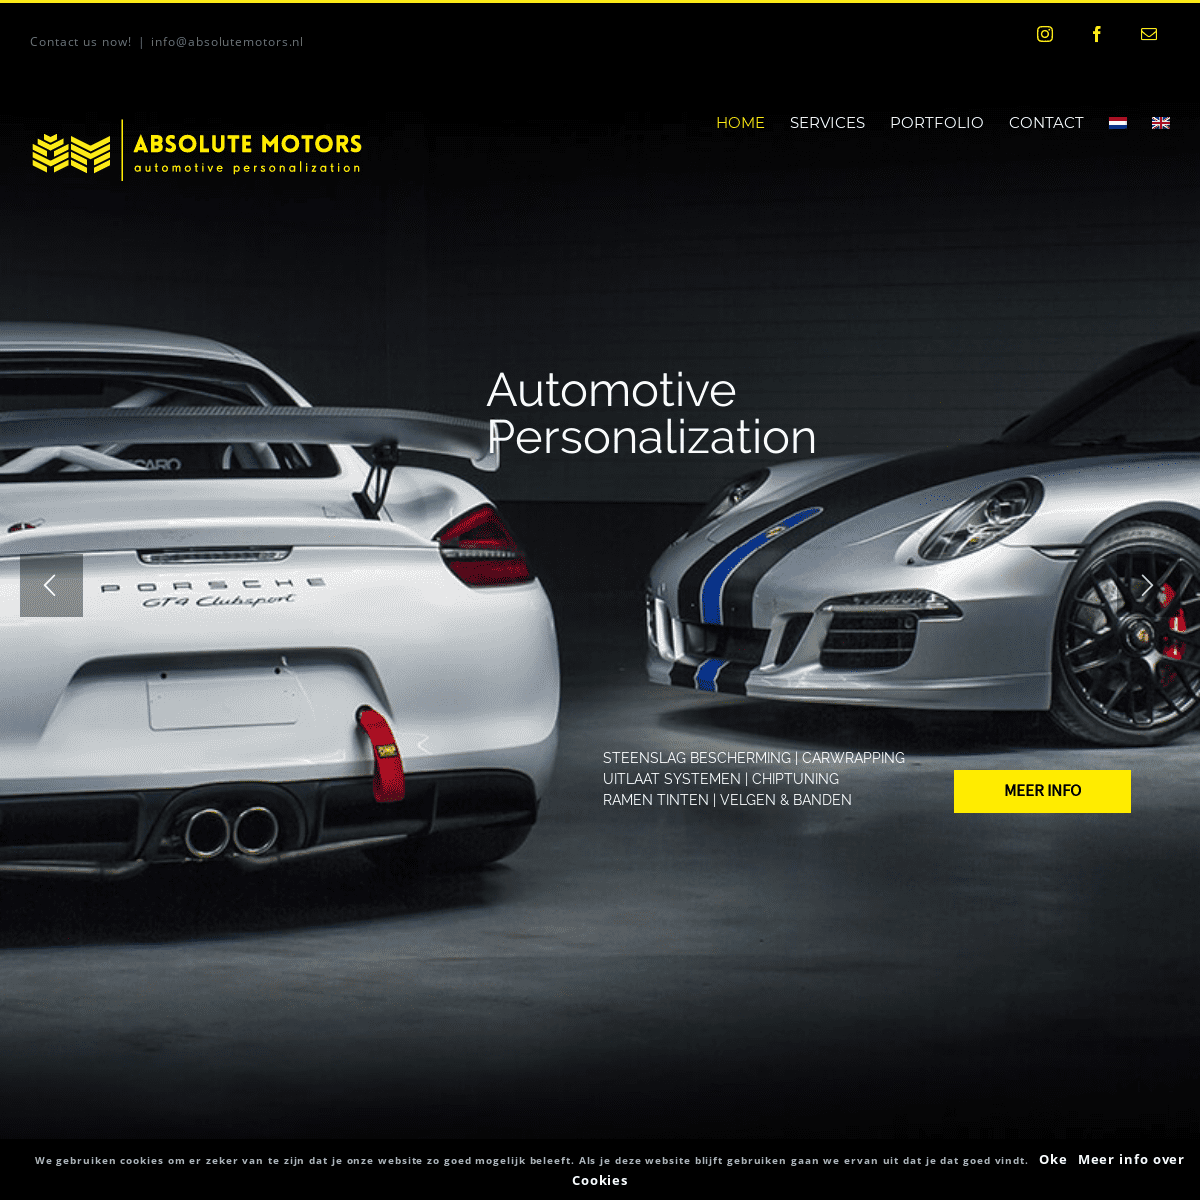 Absolute Motors - Automotive Personalization | Absolute Motors